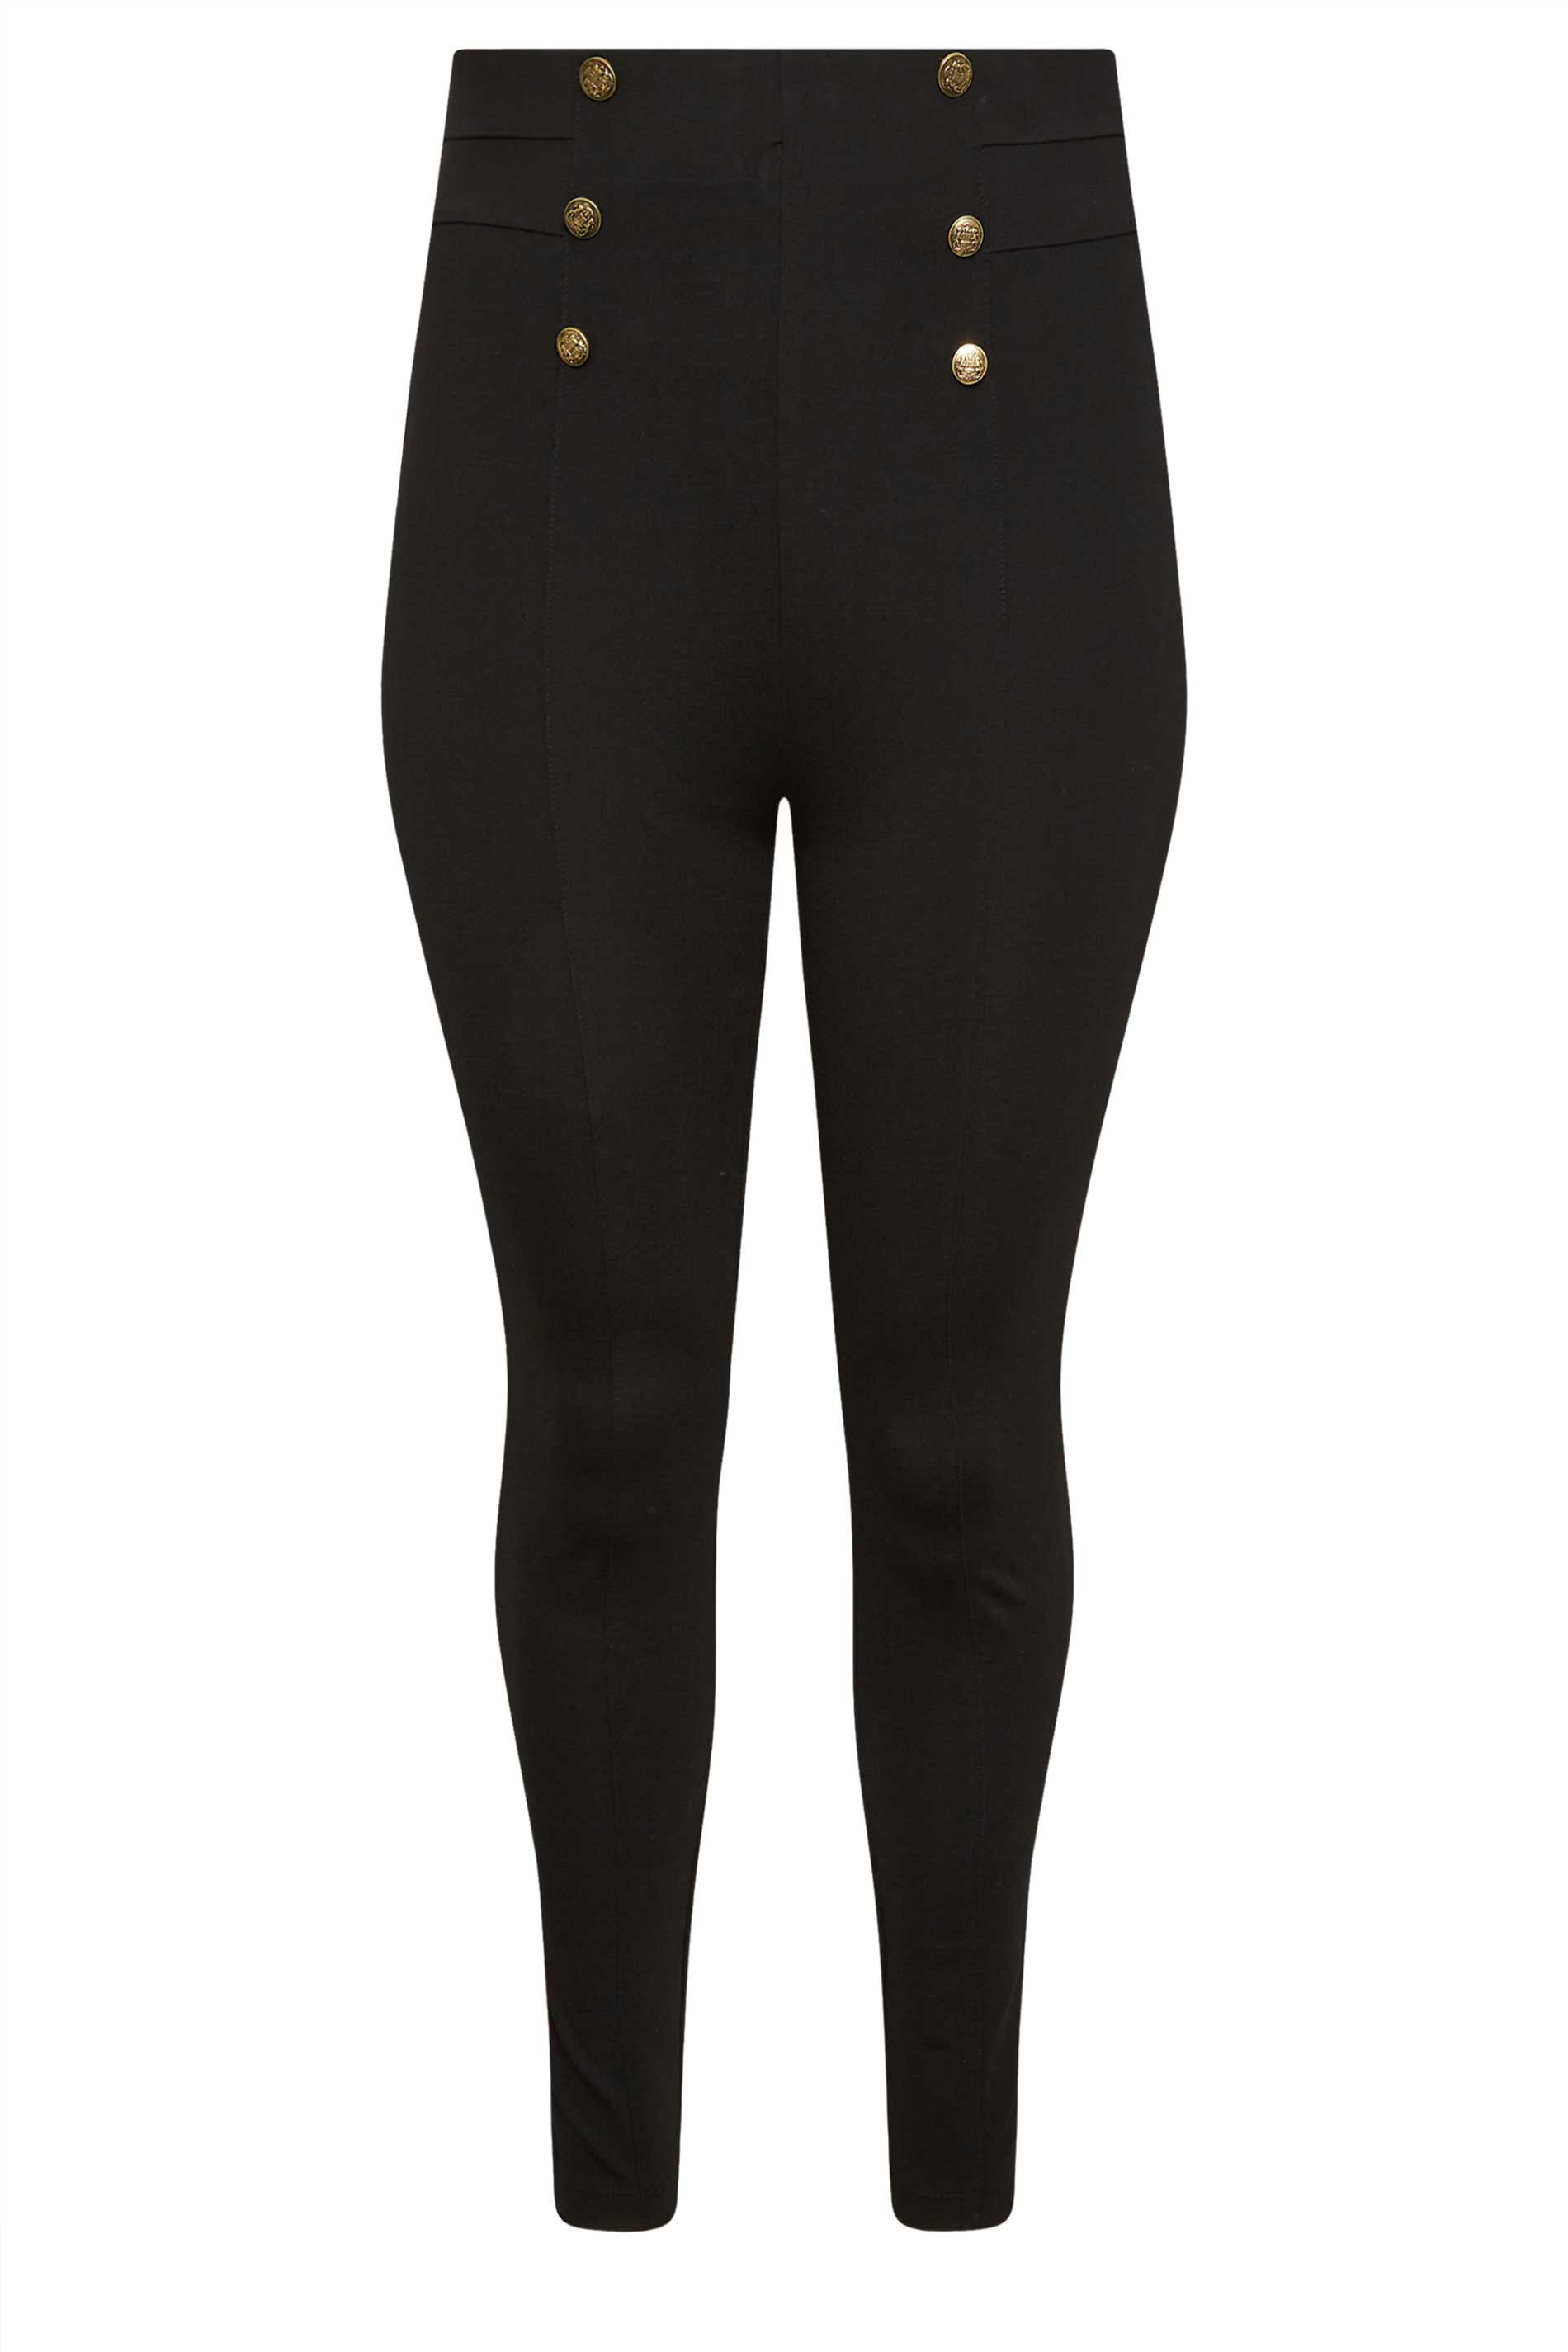 Ralph Lauren Women's Plus Metallic-Trim Ponte Pants Casual Pants Black Size  3X